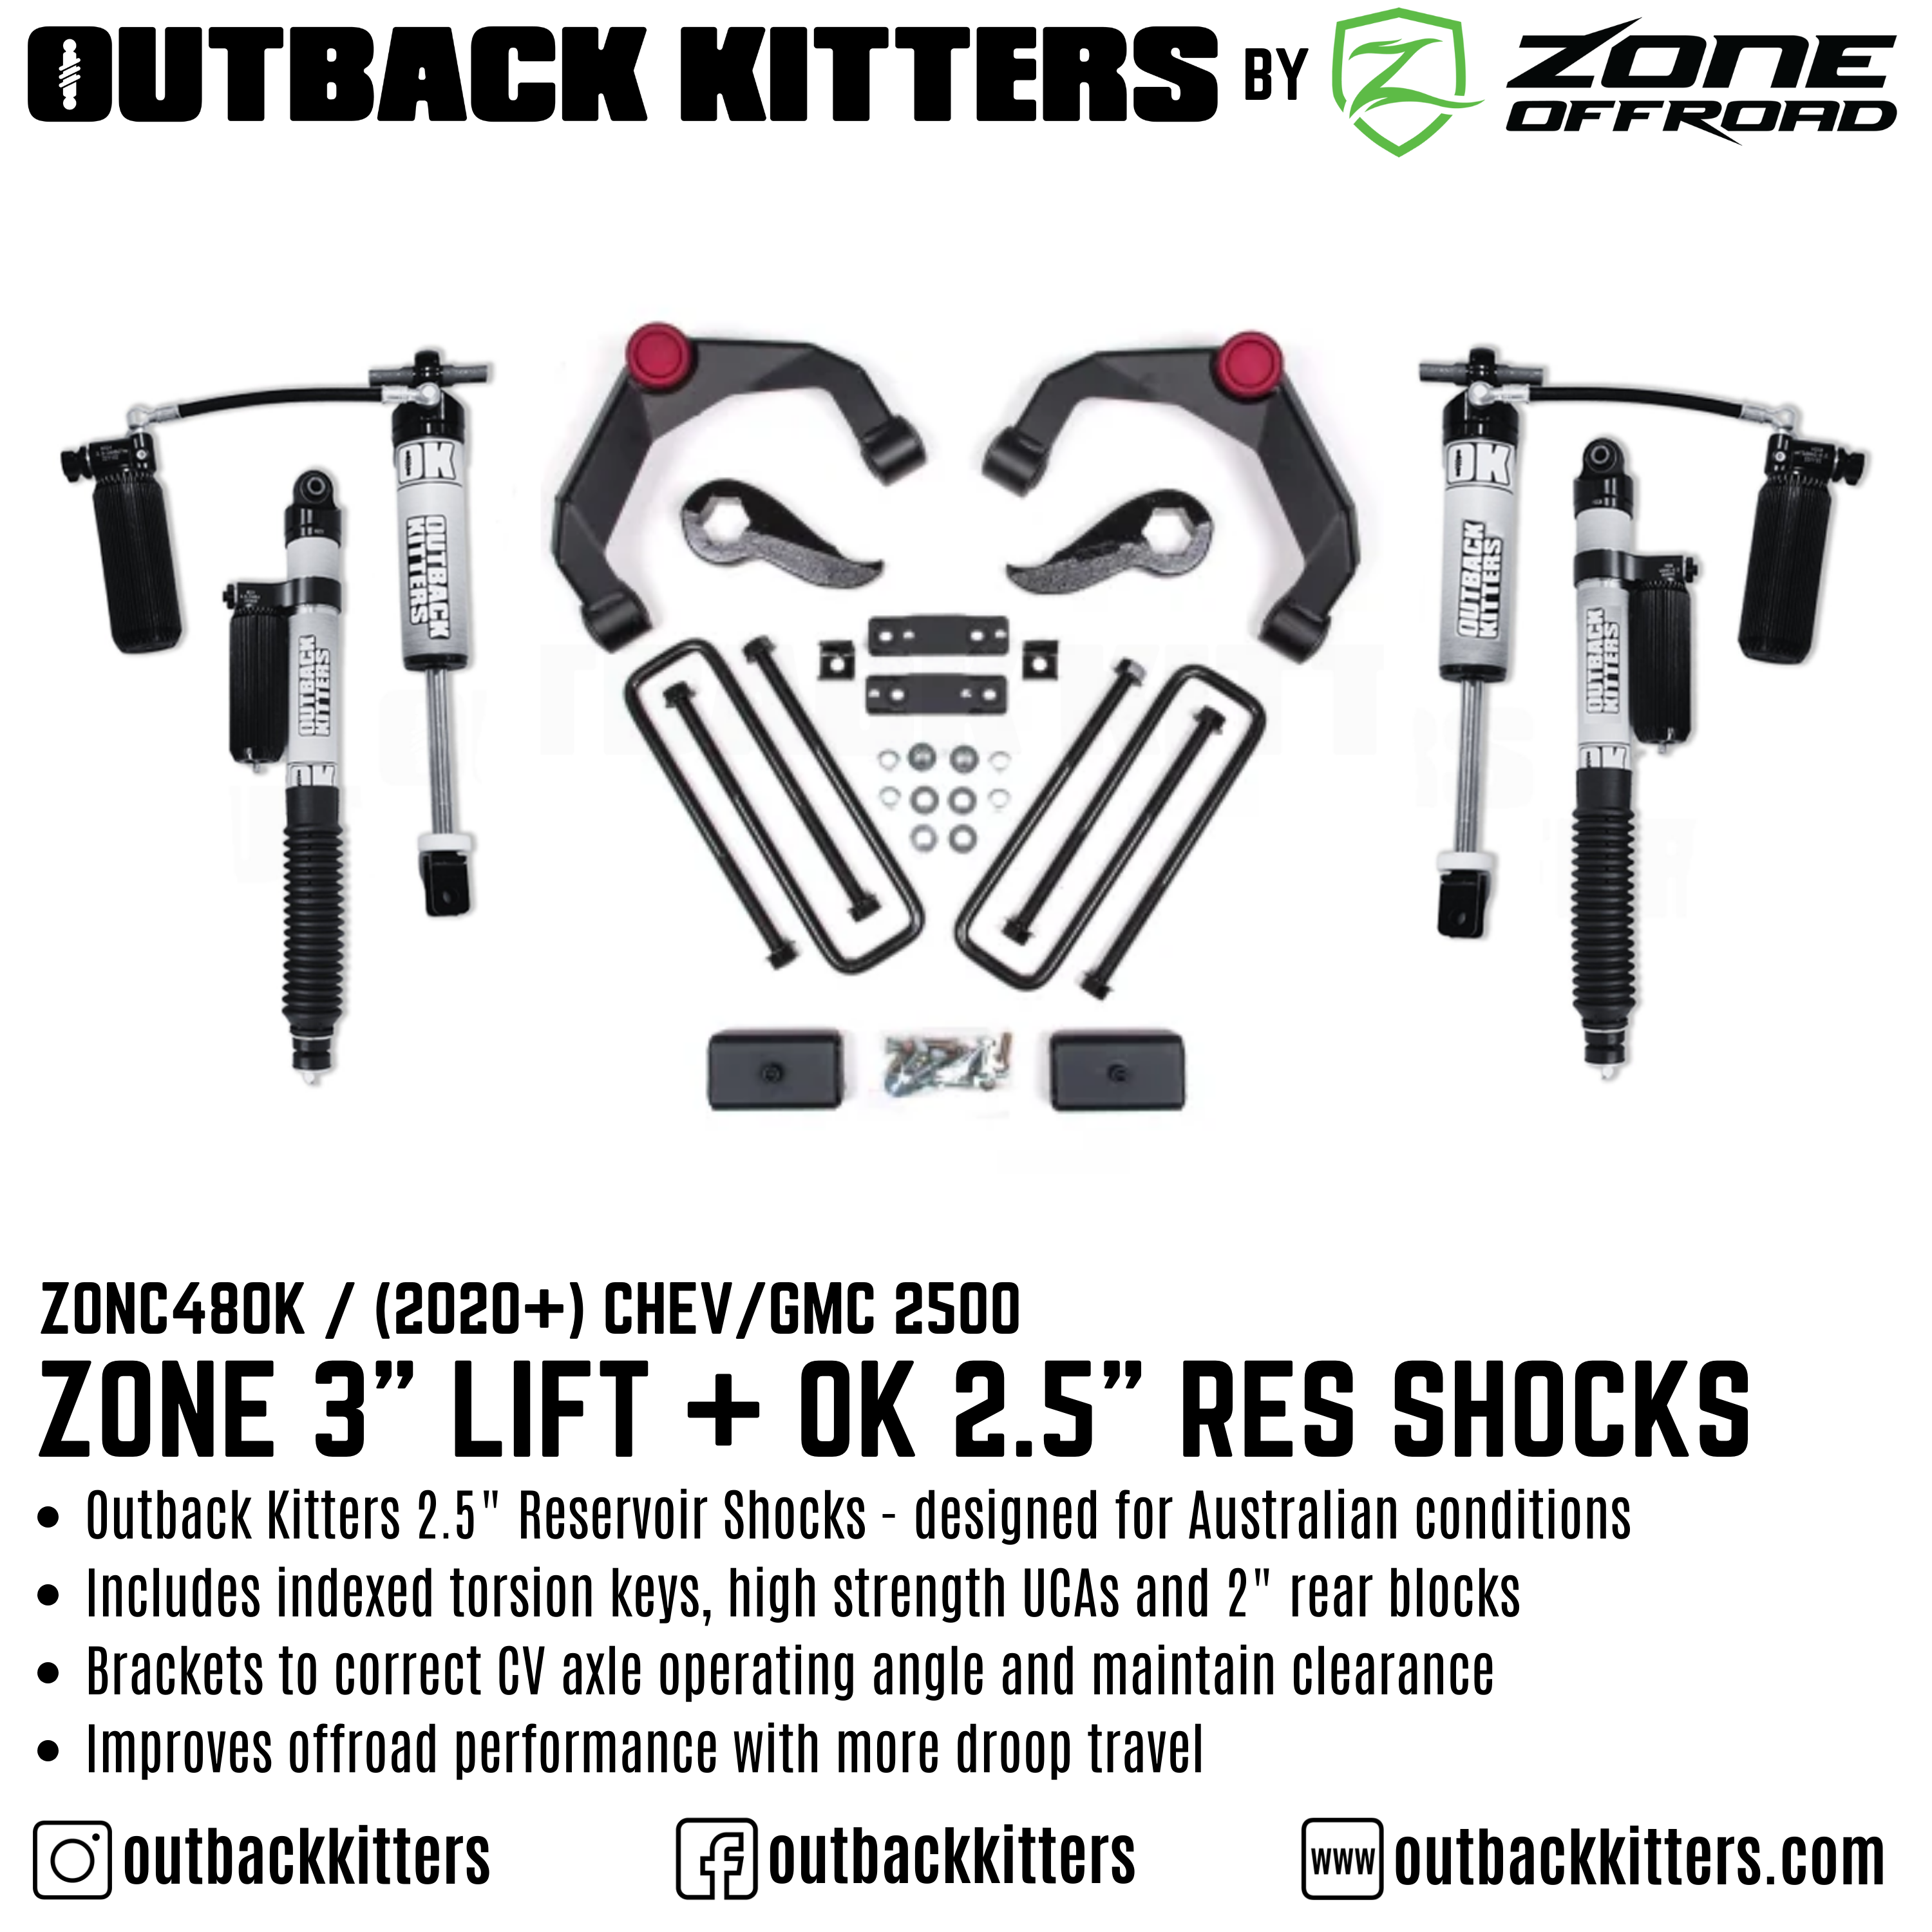 OK by Zone 3" Lift Kit + Outback Kitters 2.5" Reservoir Shocks for 2020+ Chev/GMC 2500 - Outback Kitters